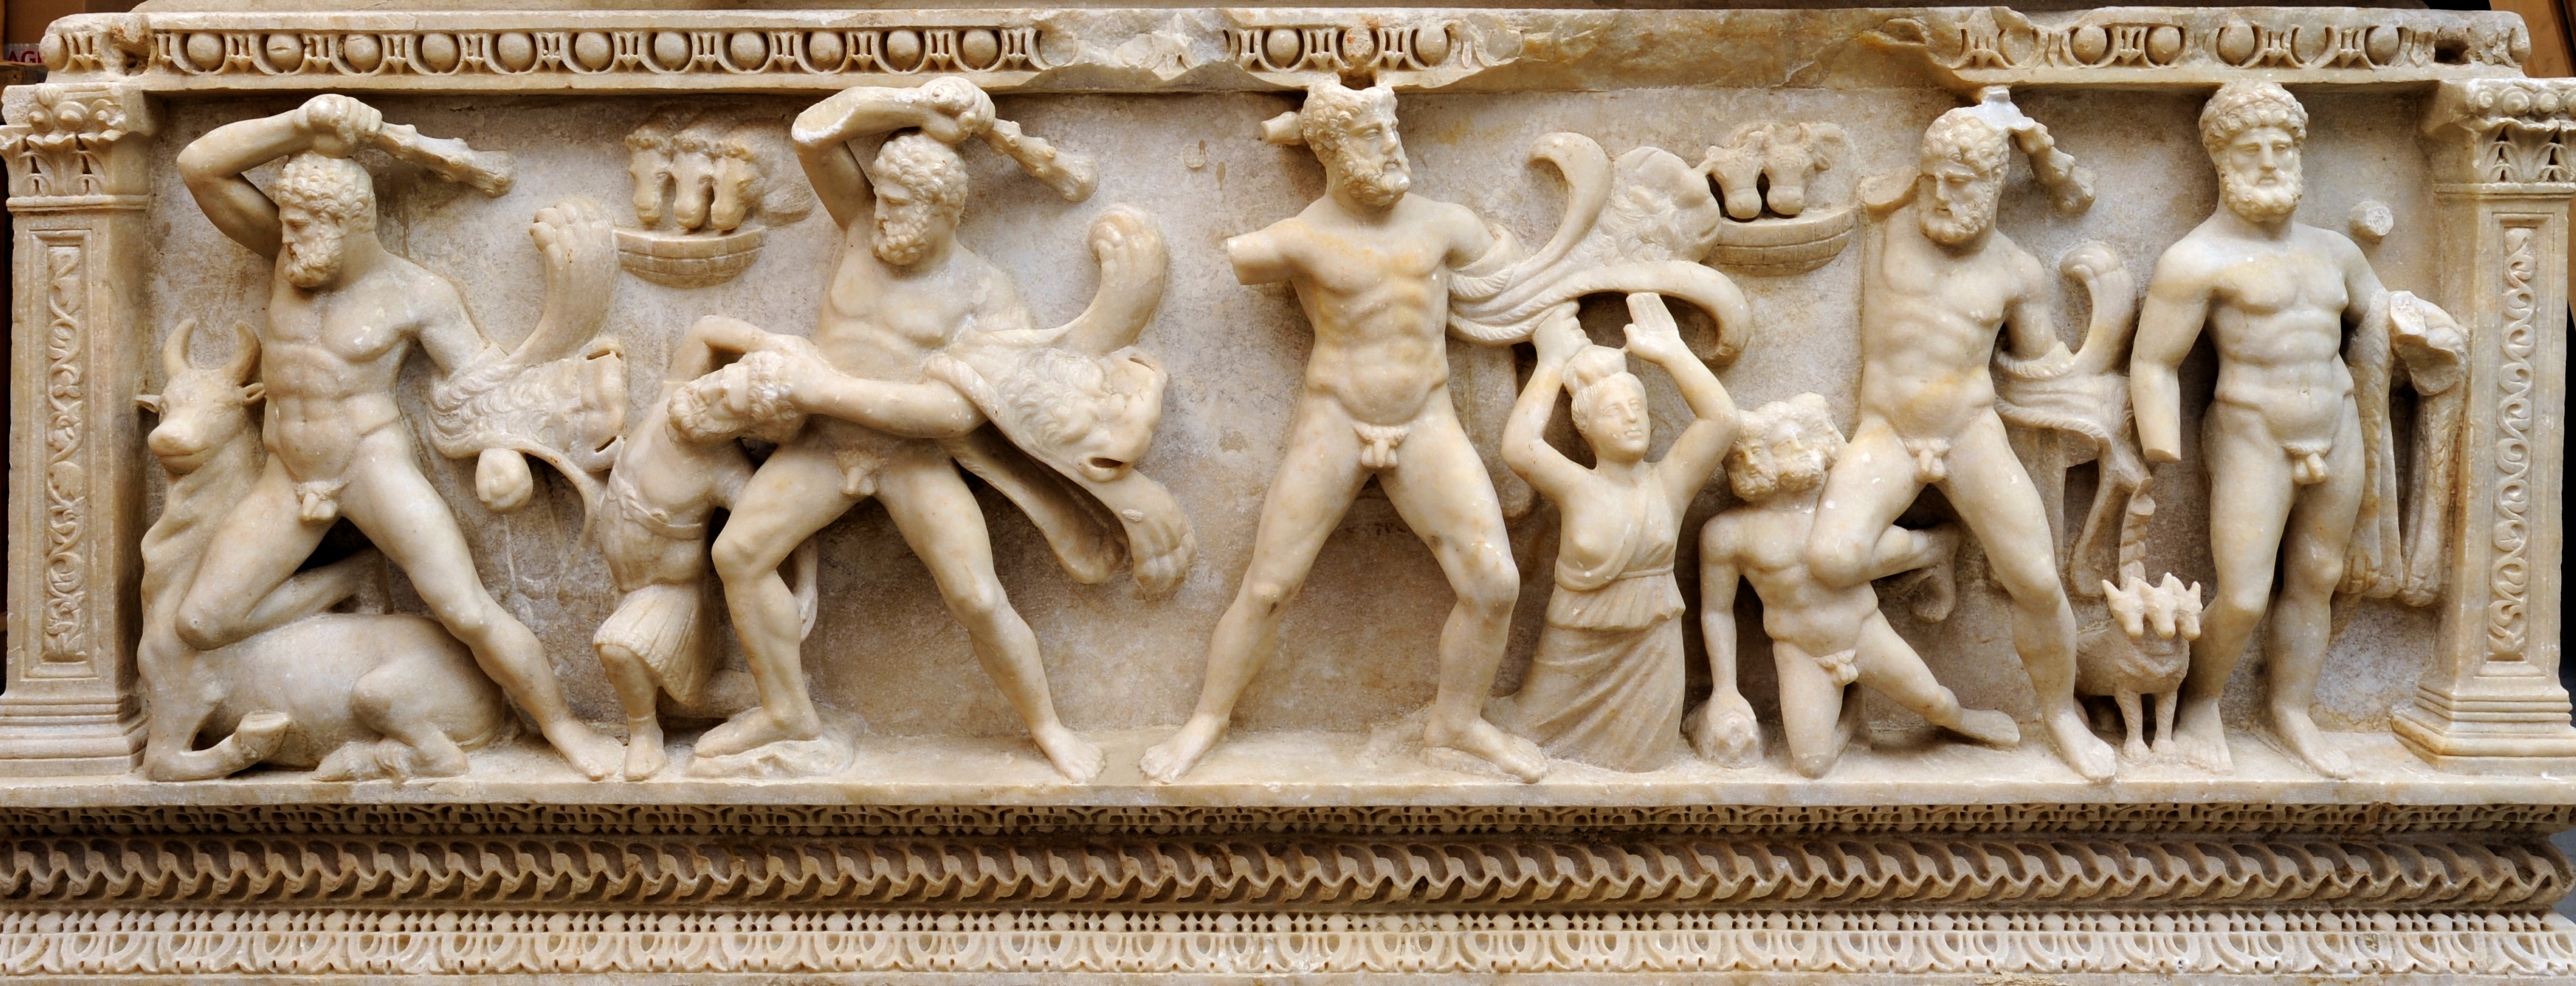 Hercules-sarcophagus-front